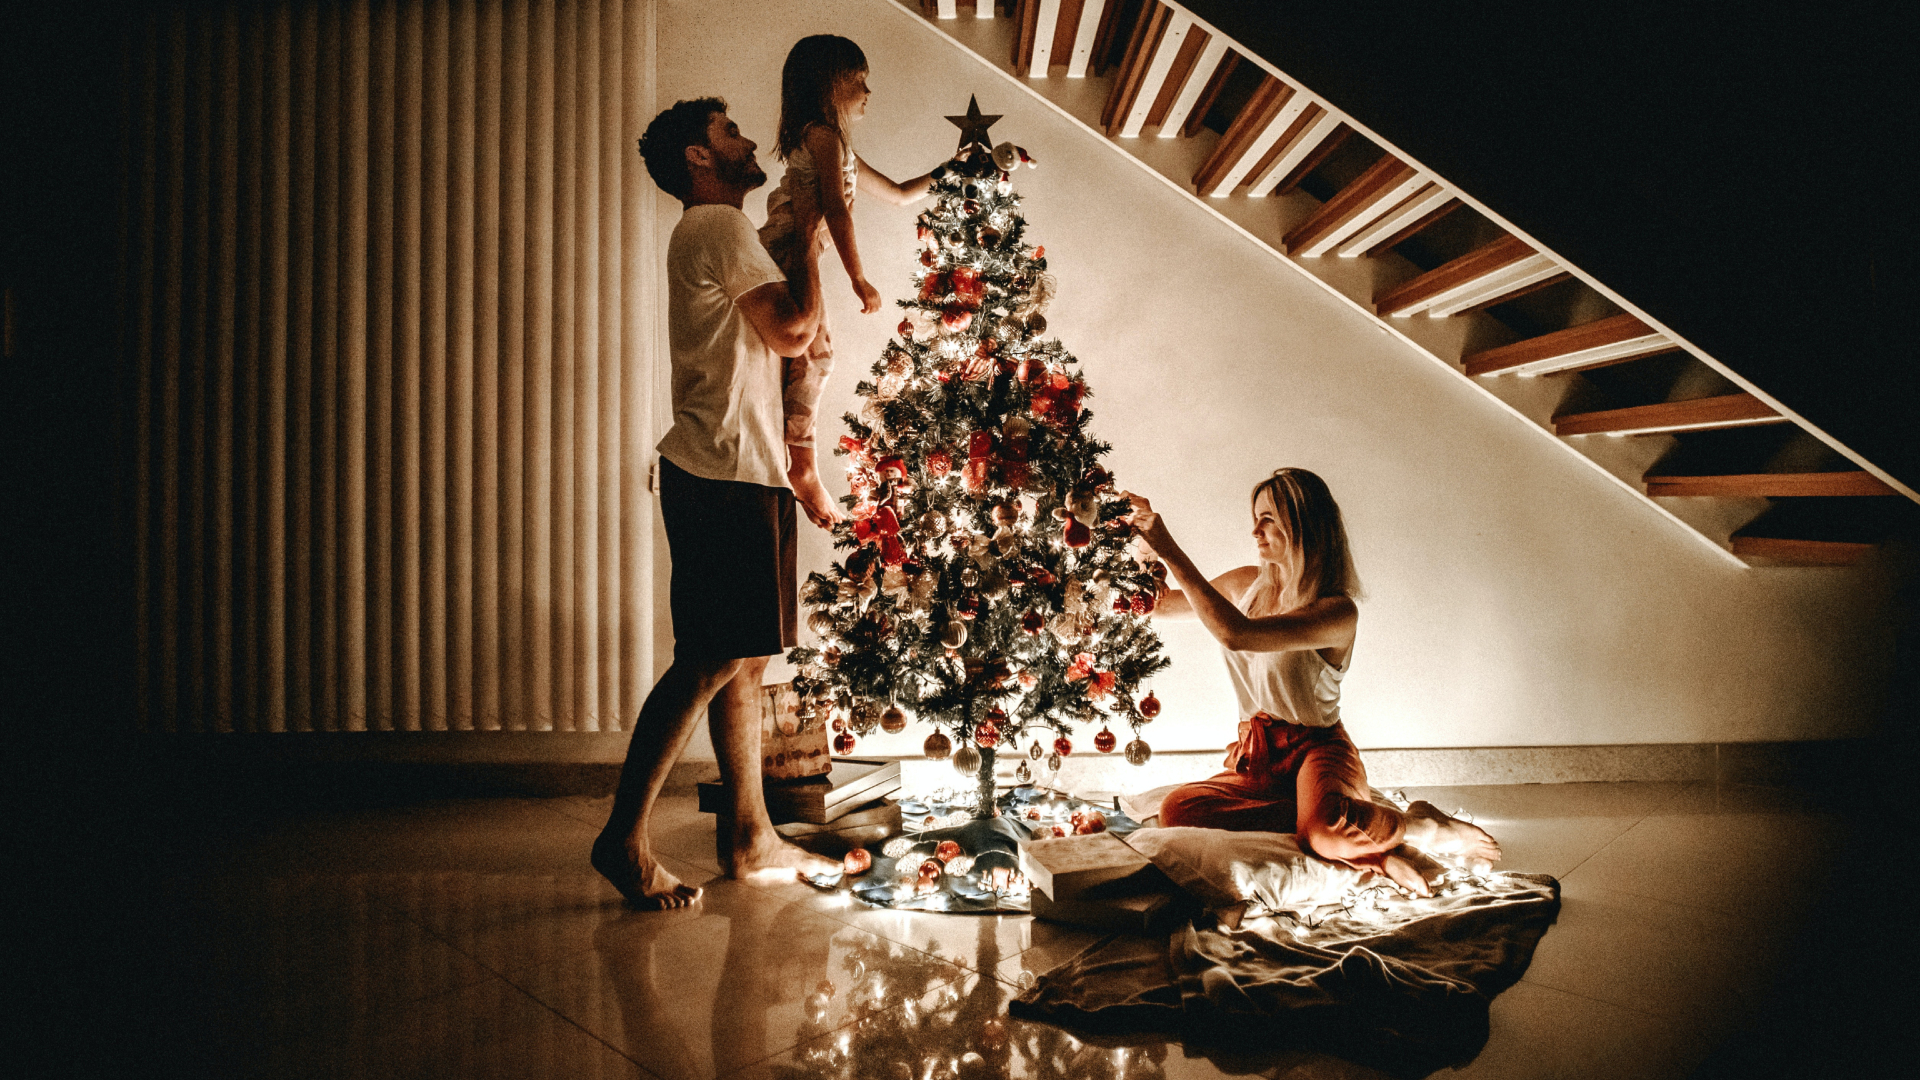 Rodina zdobí vianočný stromček